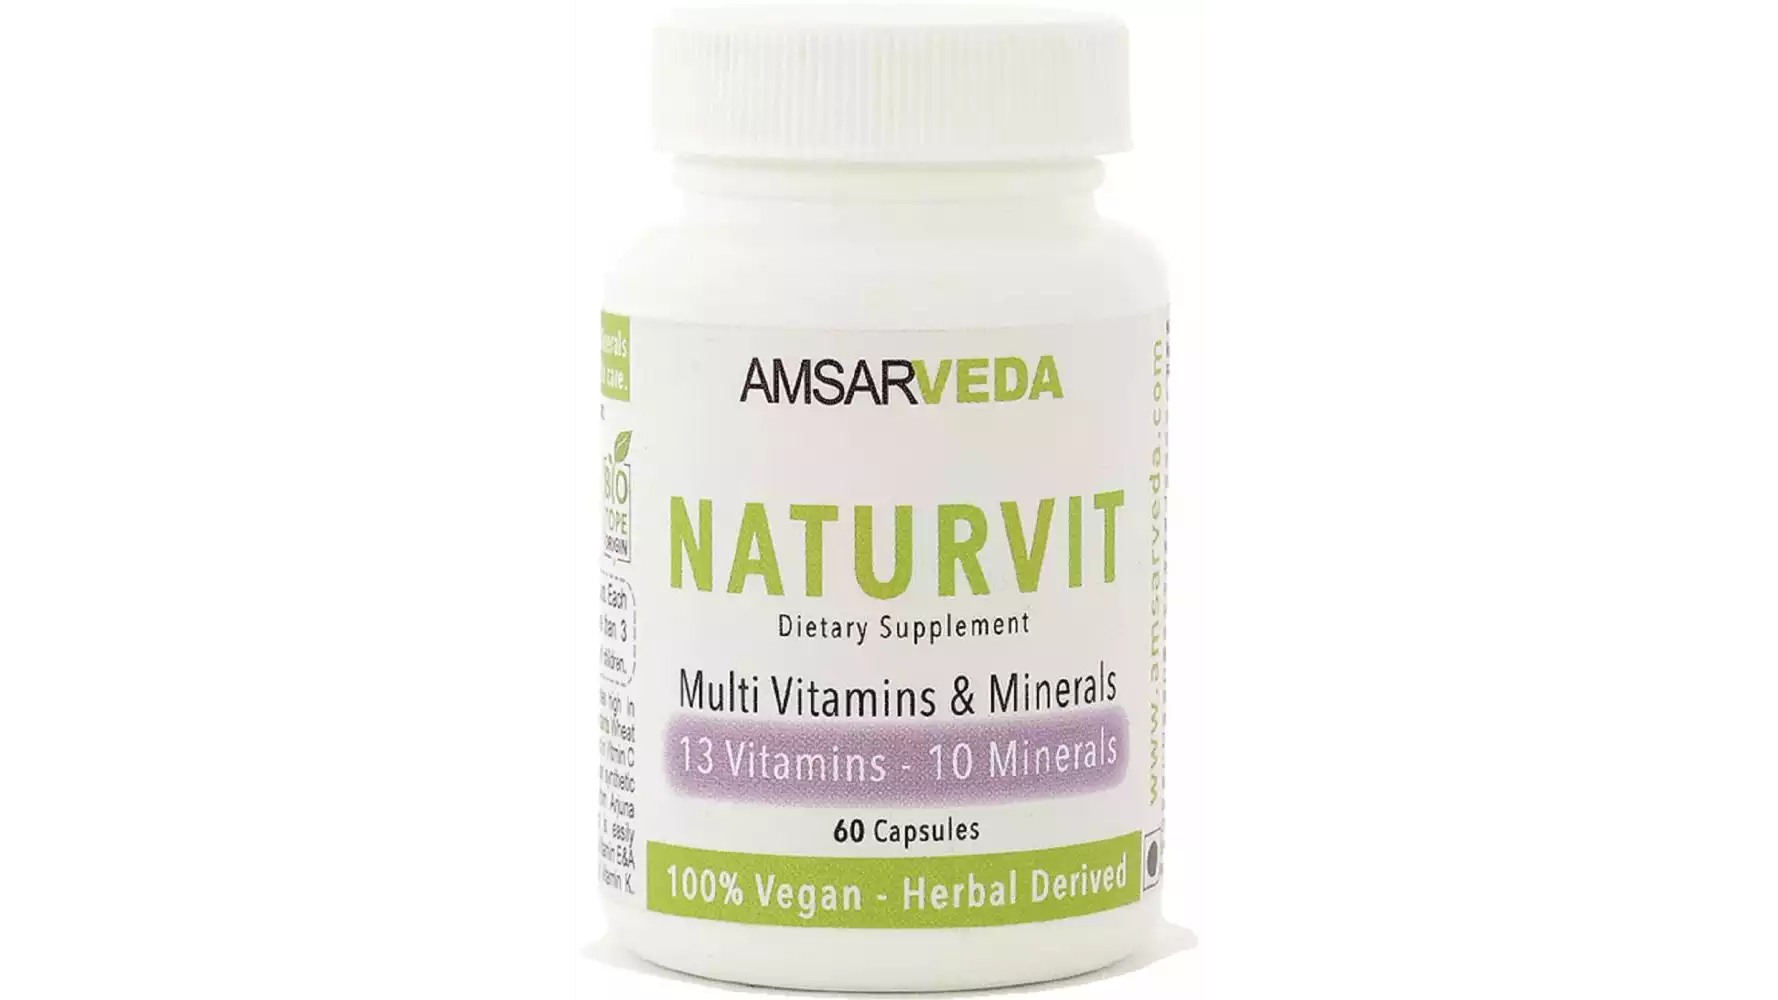 Amsarveda Naturvit - Natural Multi Vitamins & Minerals (60caps)